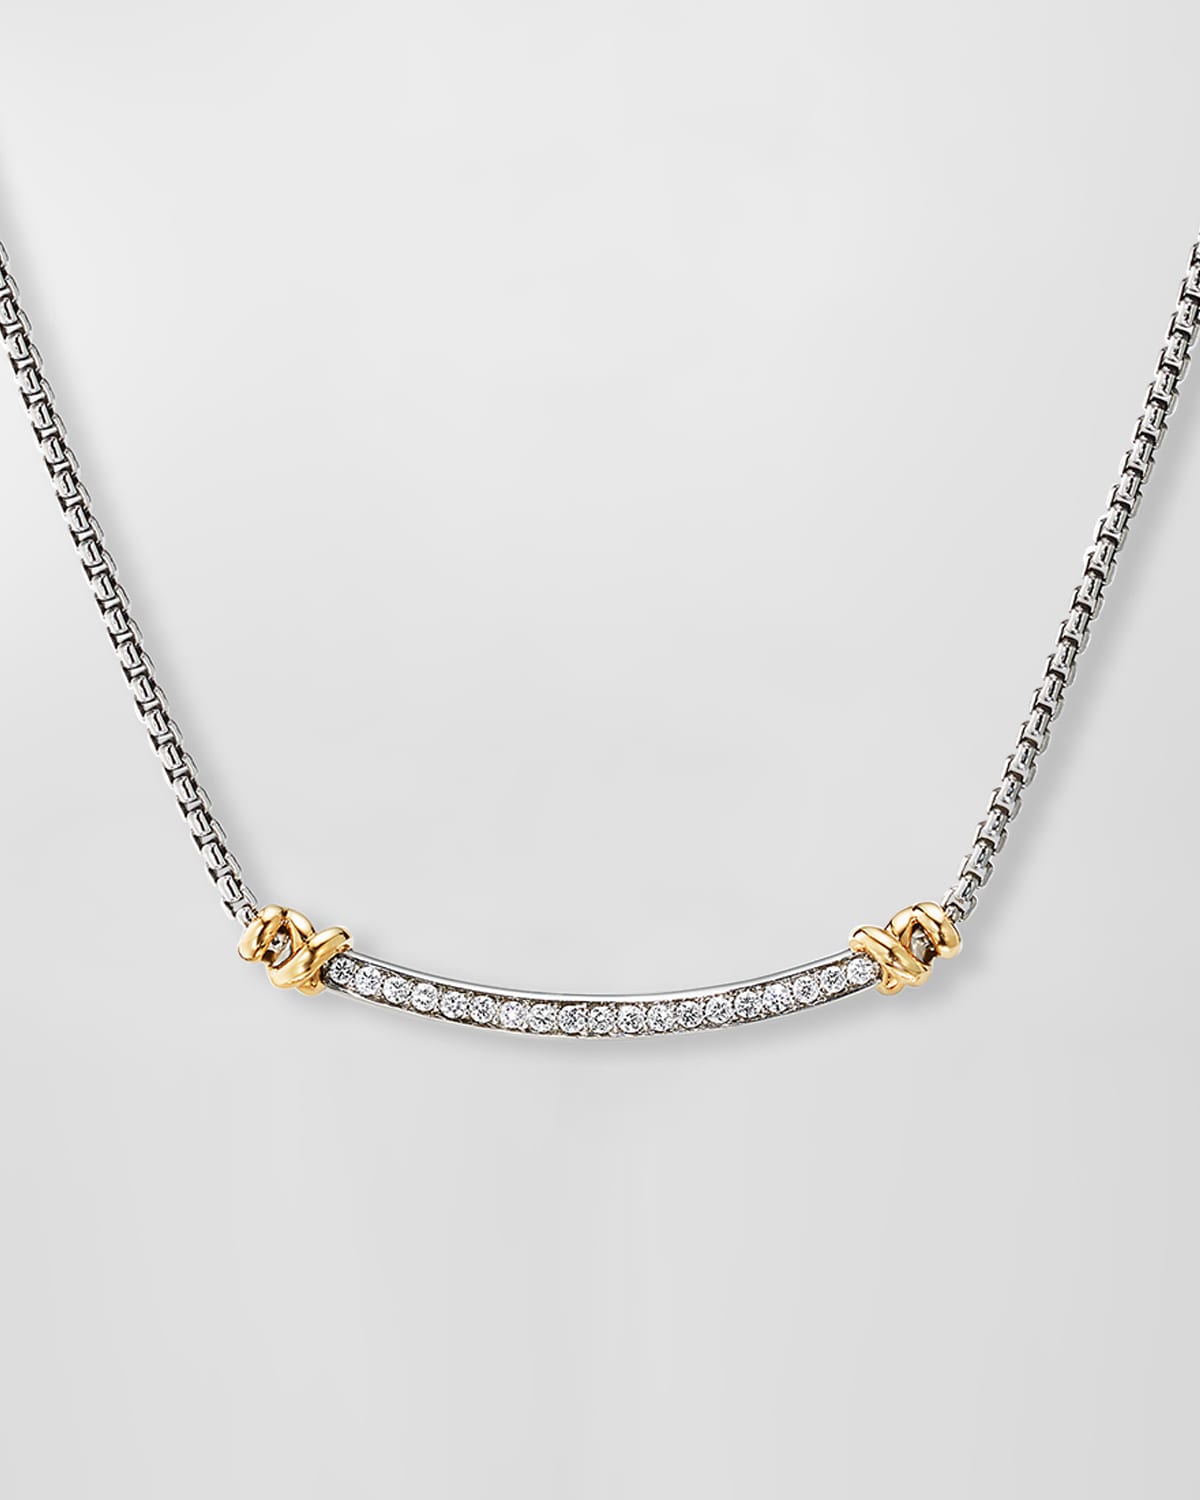 David Yurman Helena Tassel Necklace in 18K Yellow Gold with Diamonds